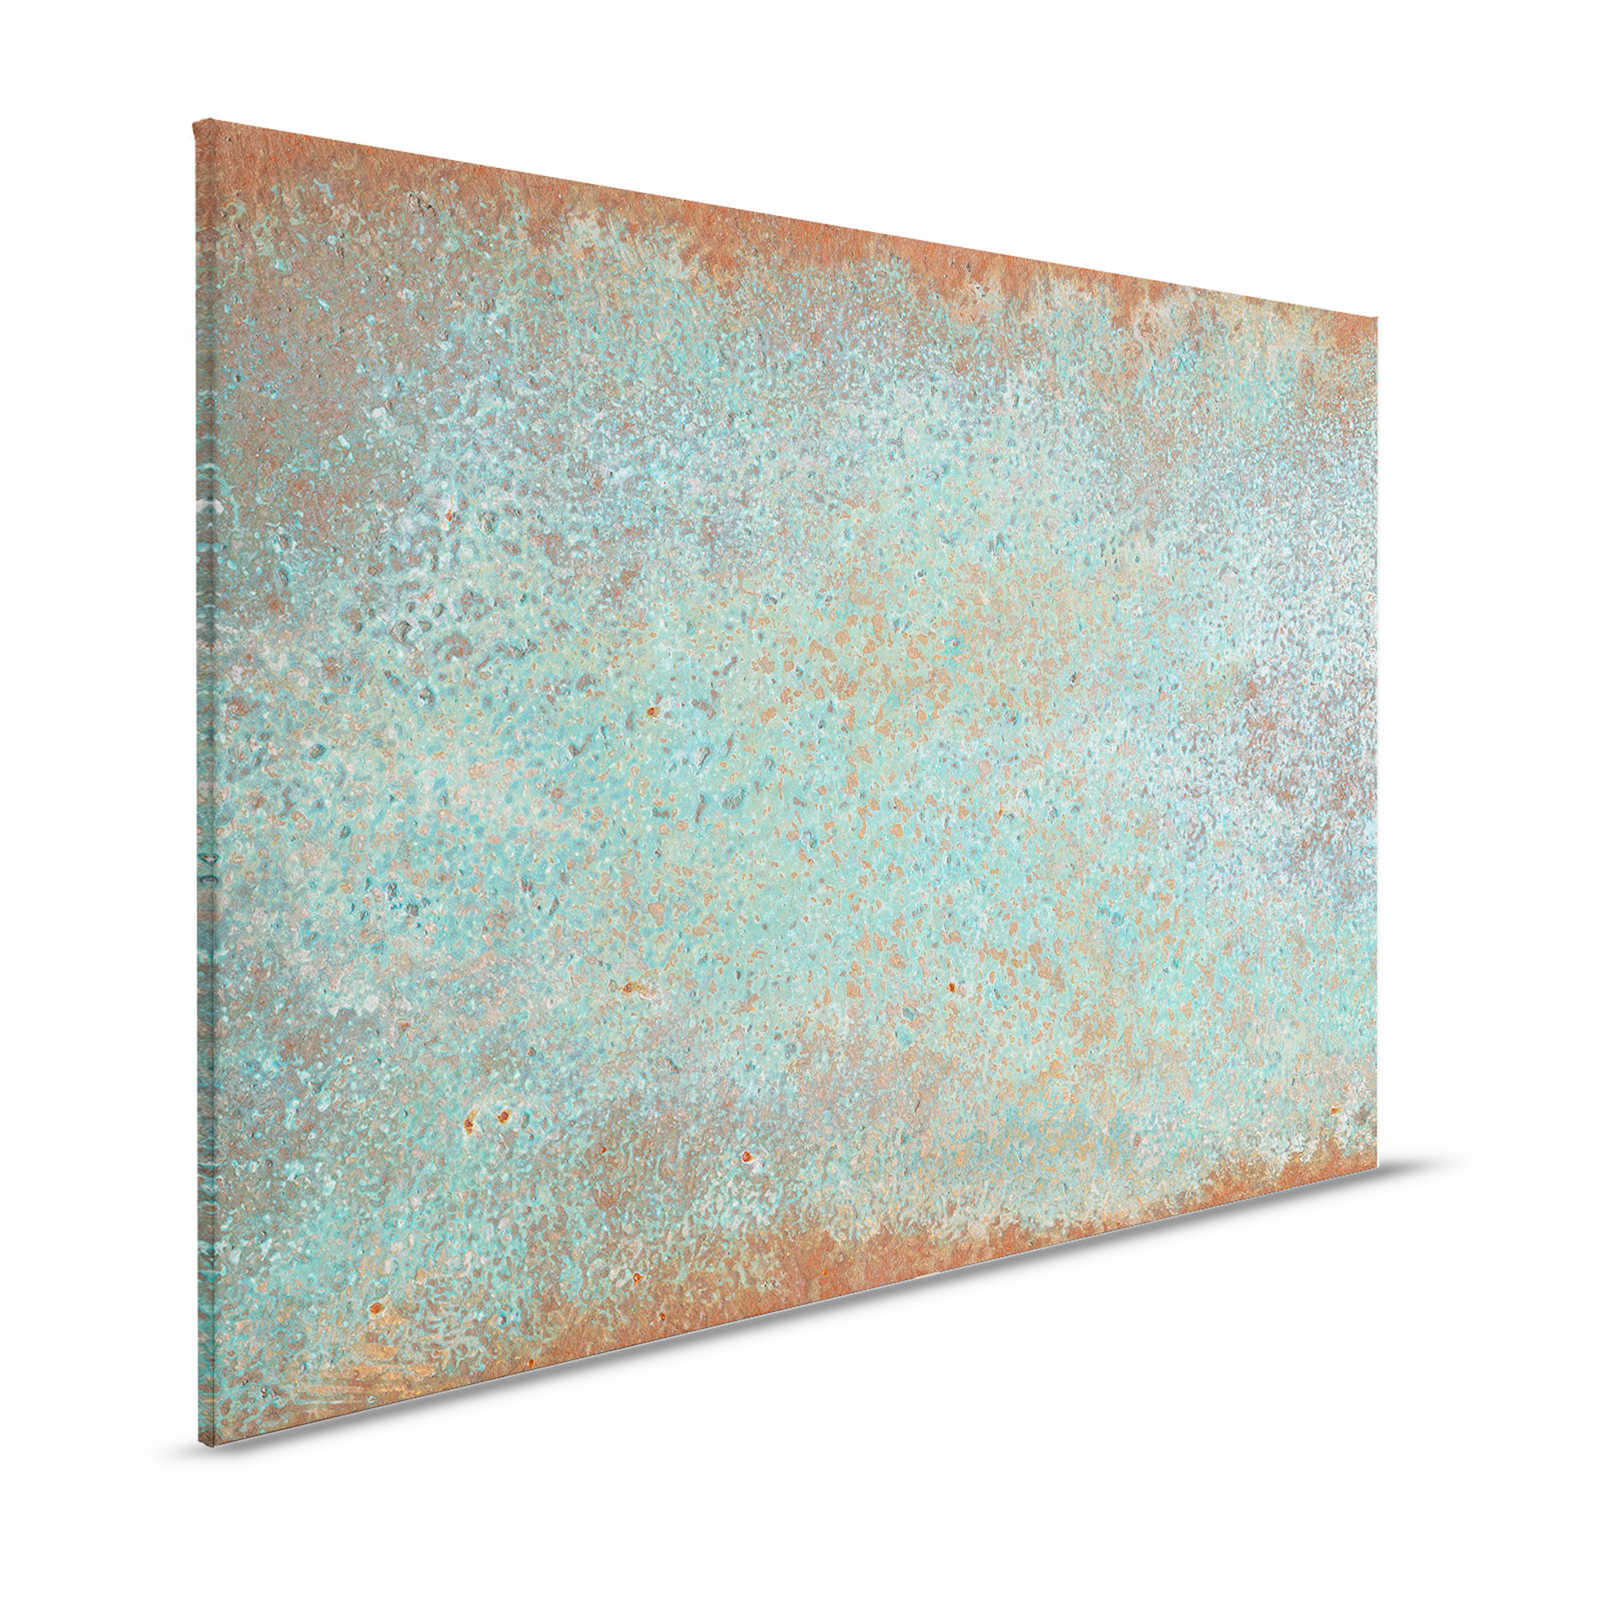 Pittura su tela Metal Optics Patina turchese con ruggine - 1,20 m x 0,80 m
